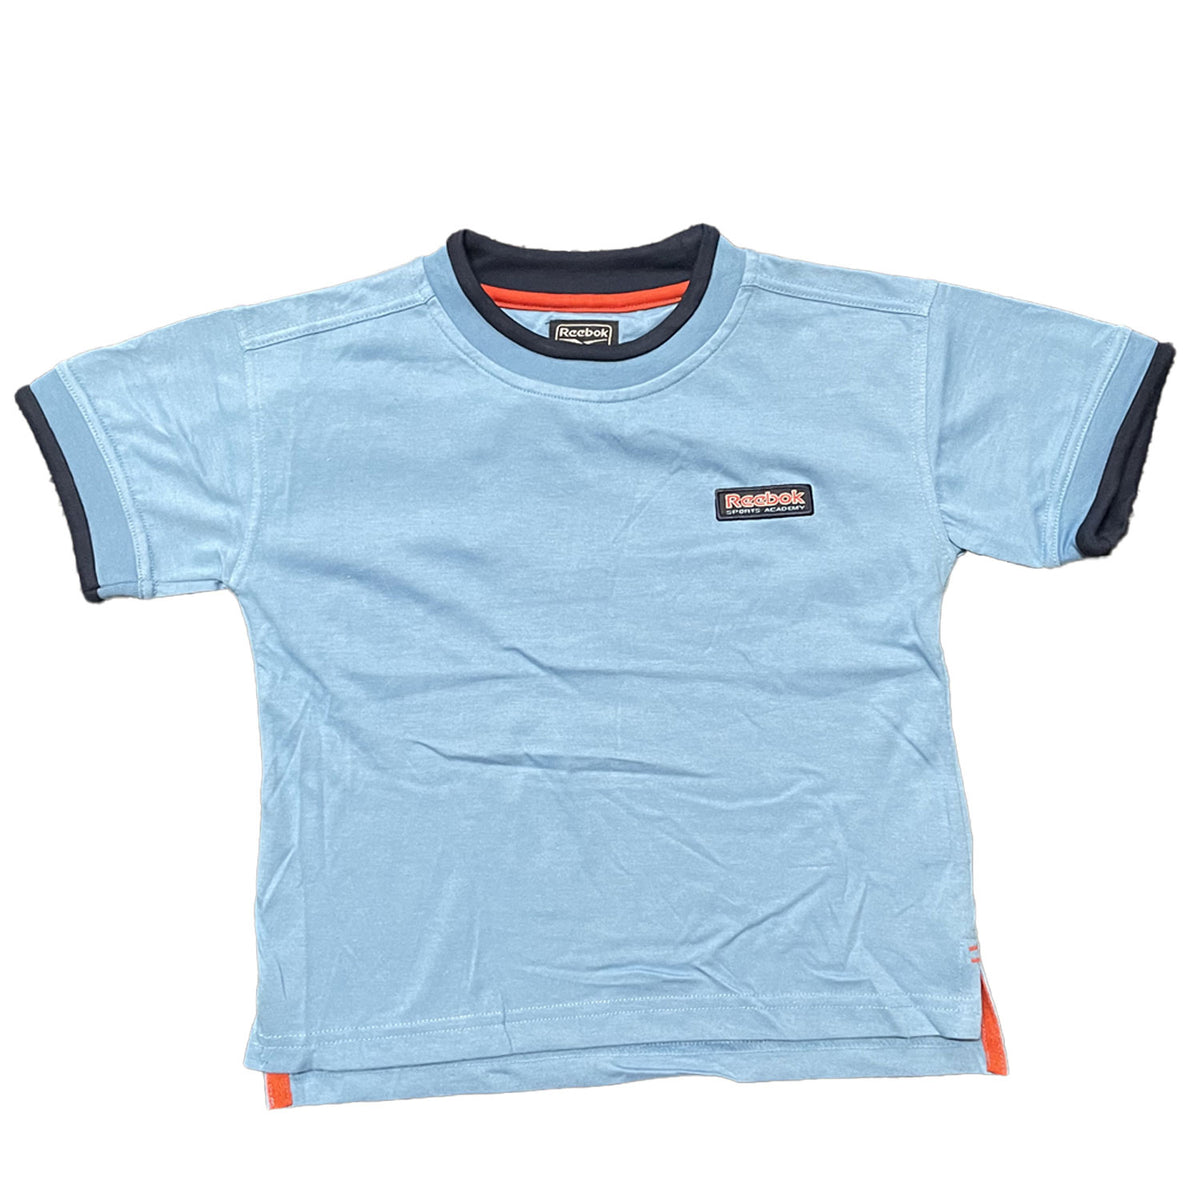 Reebok Sports Academy Infant T-Shirt 3